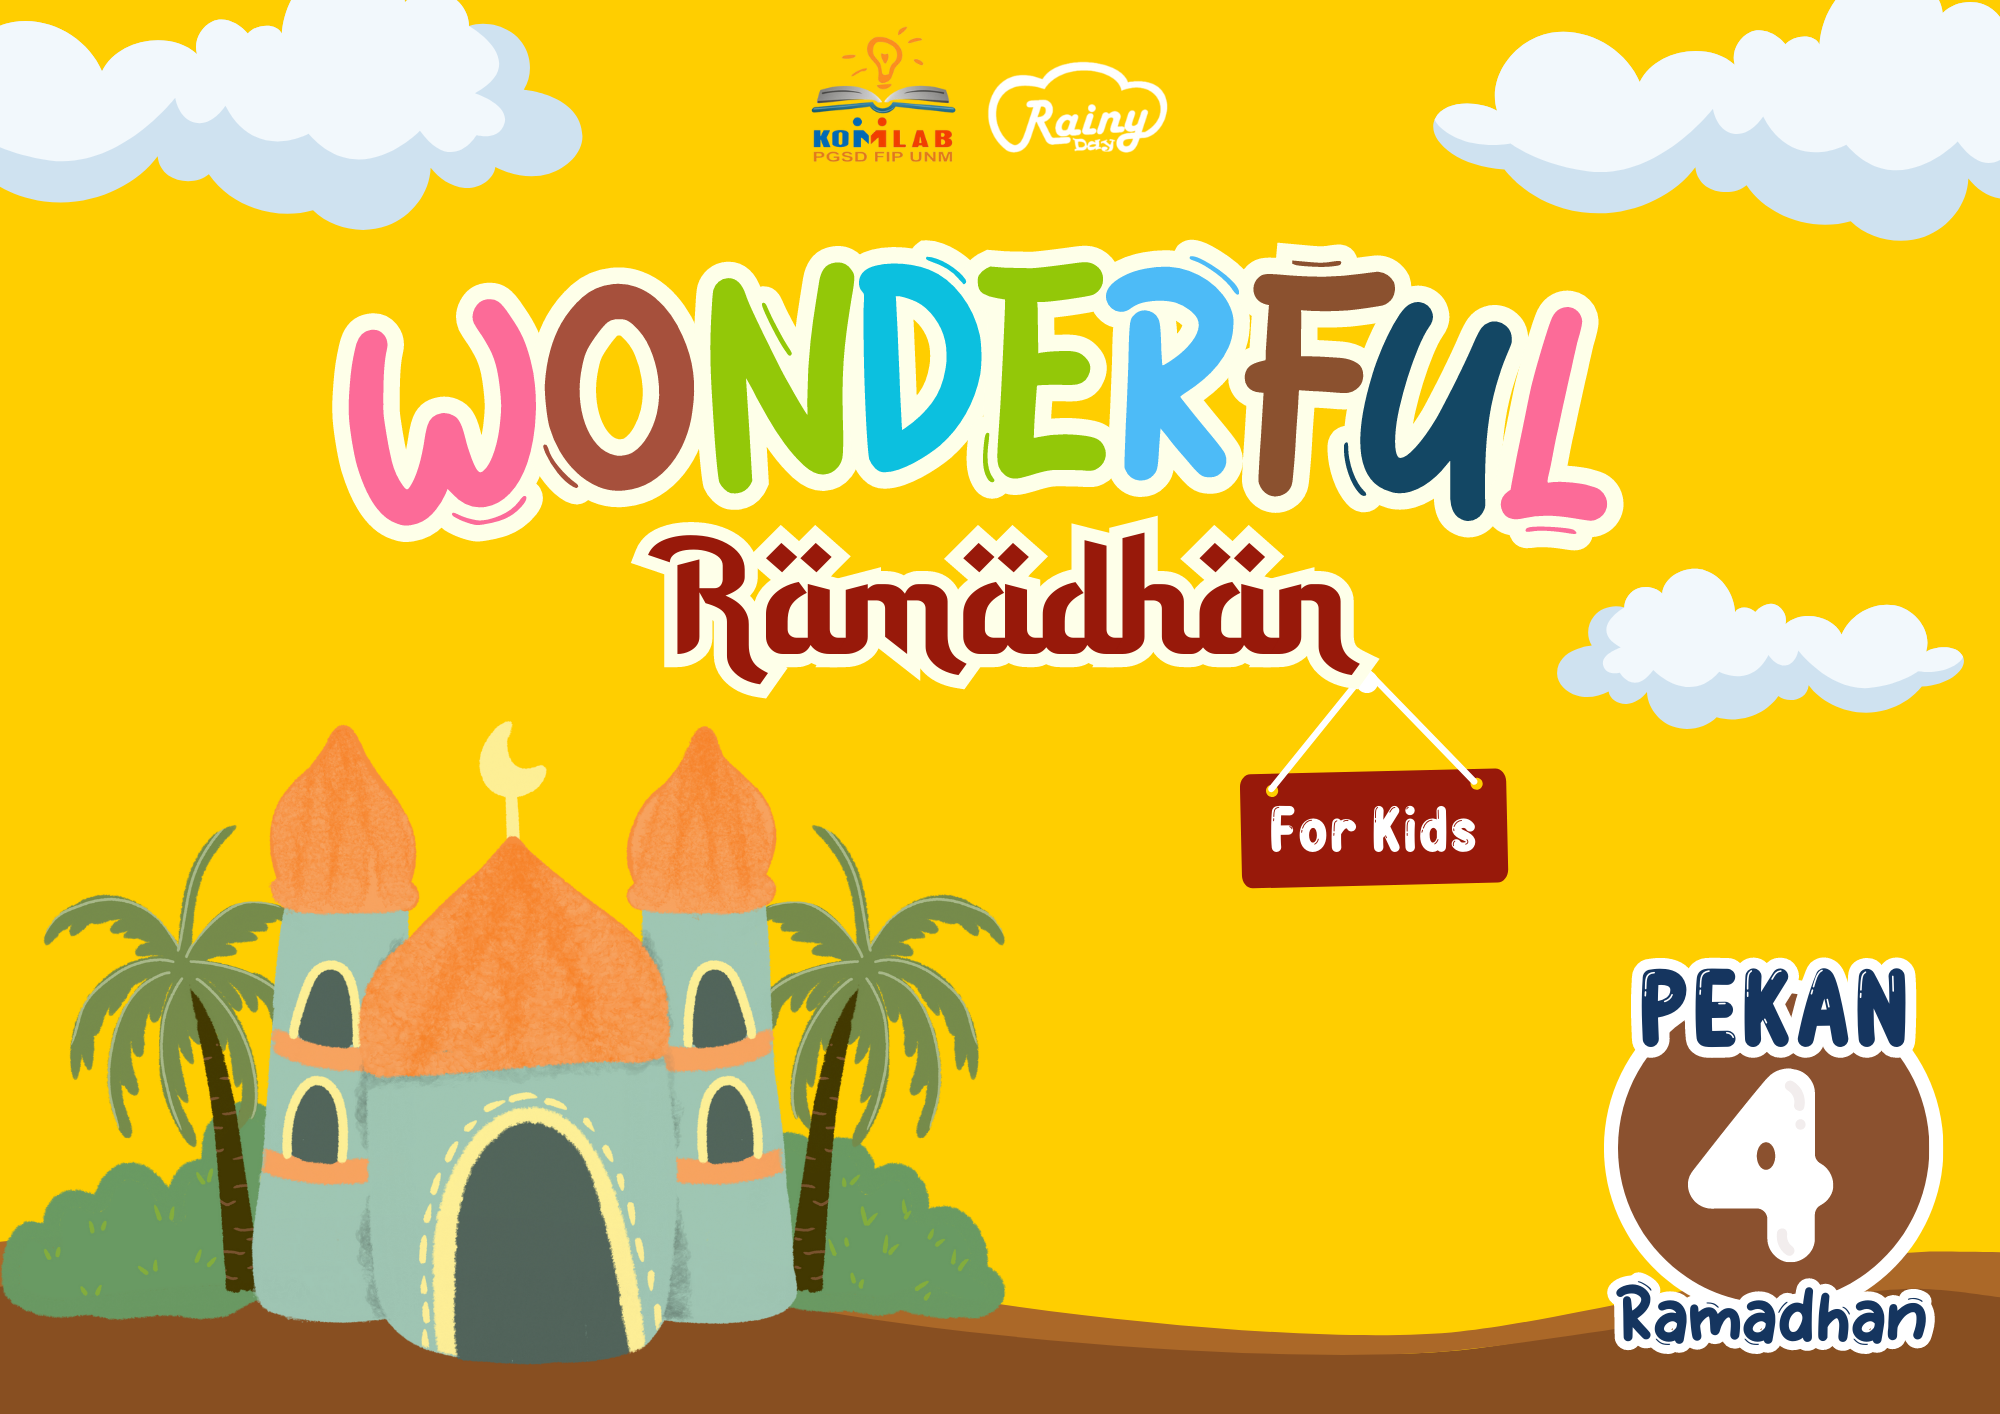 Wonderful Ramadan 2